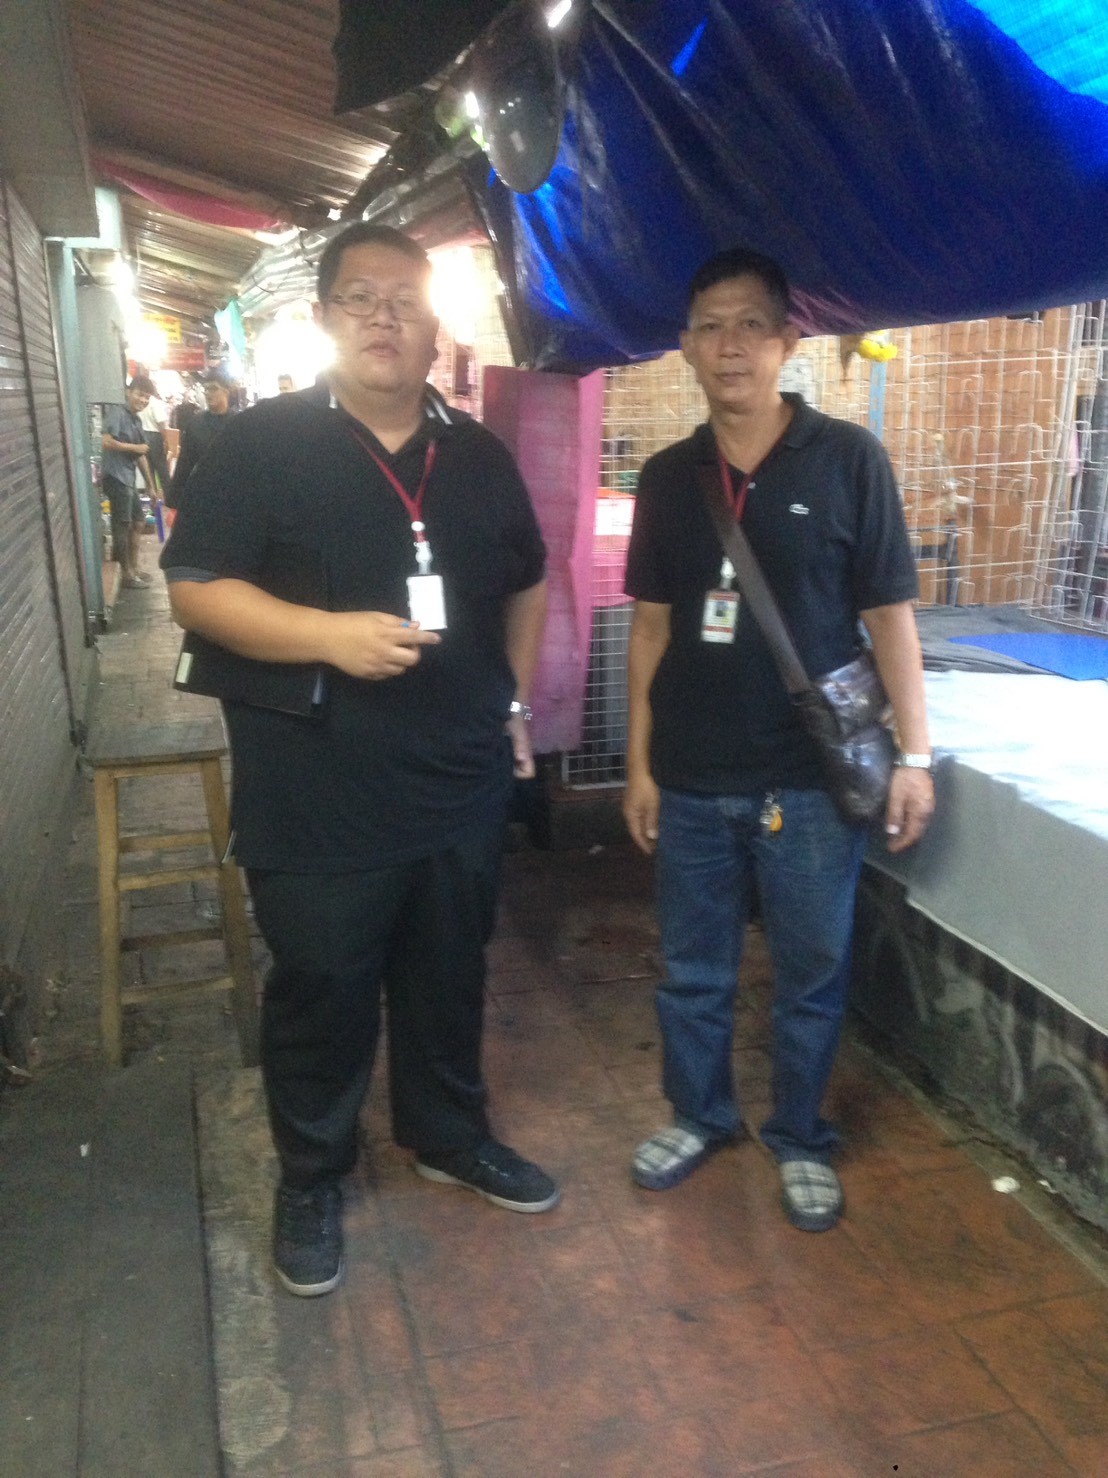 20th September 2017 Inspection at Khlong Thom Market No IPR Infringing at Khlong Thom Market